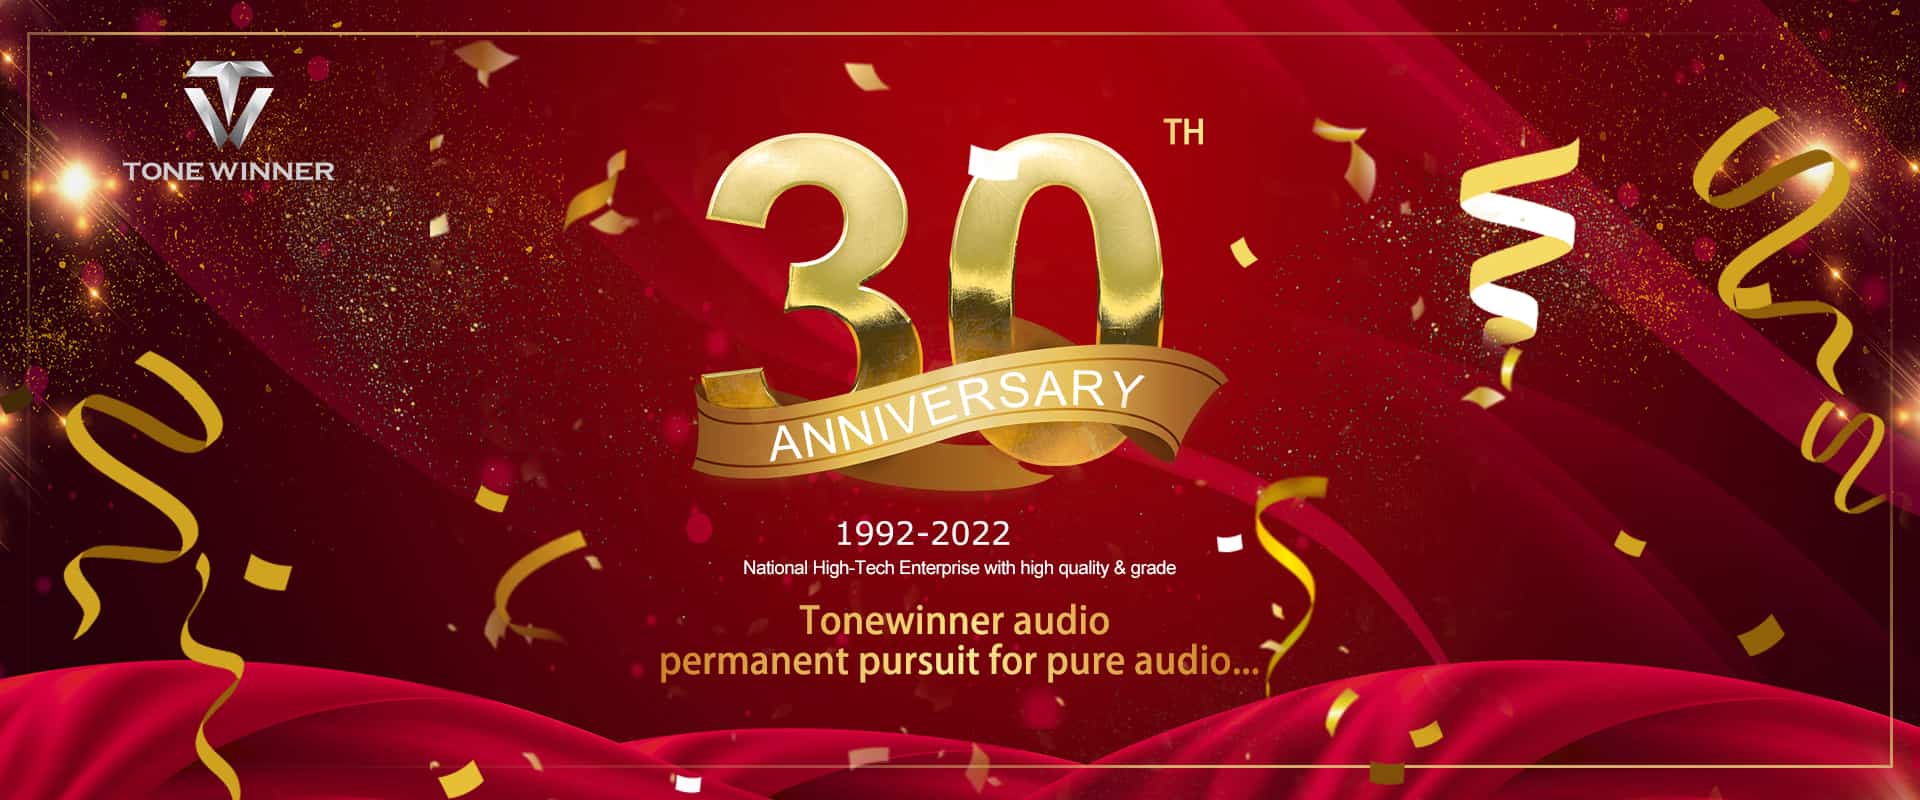 Tonewinner 30th Anniversary celebration, congratulations！